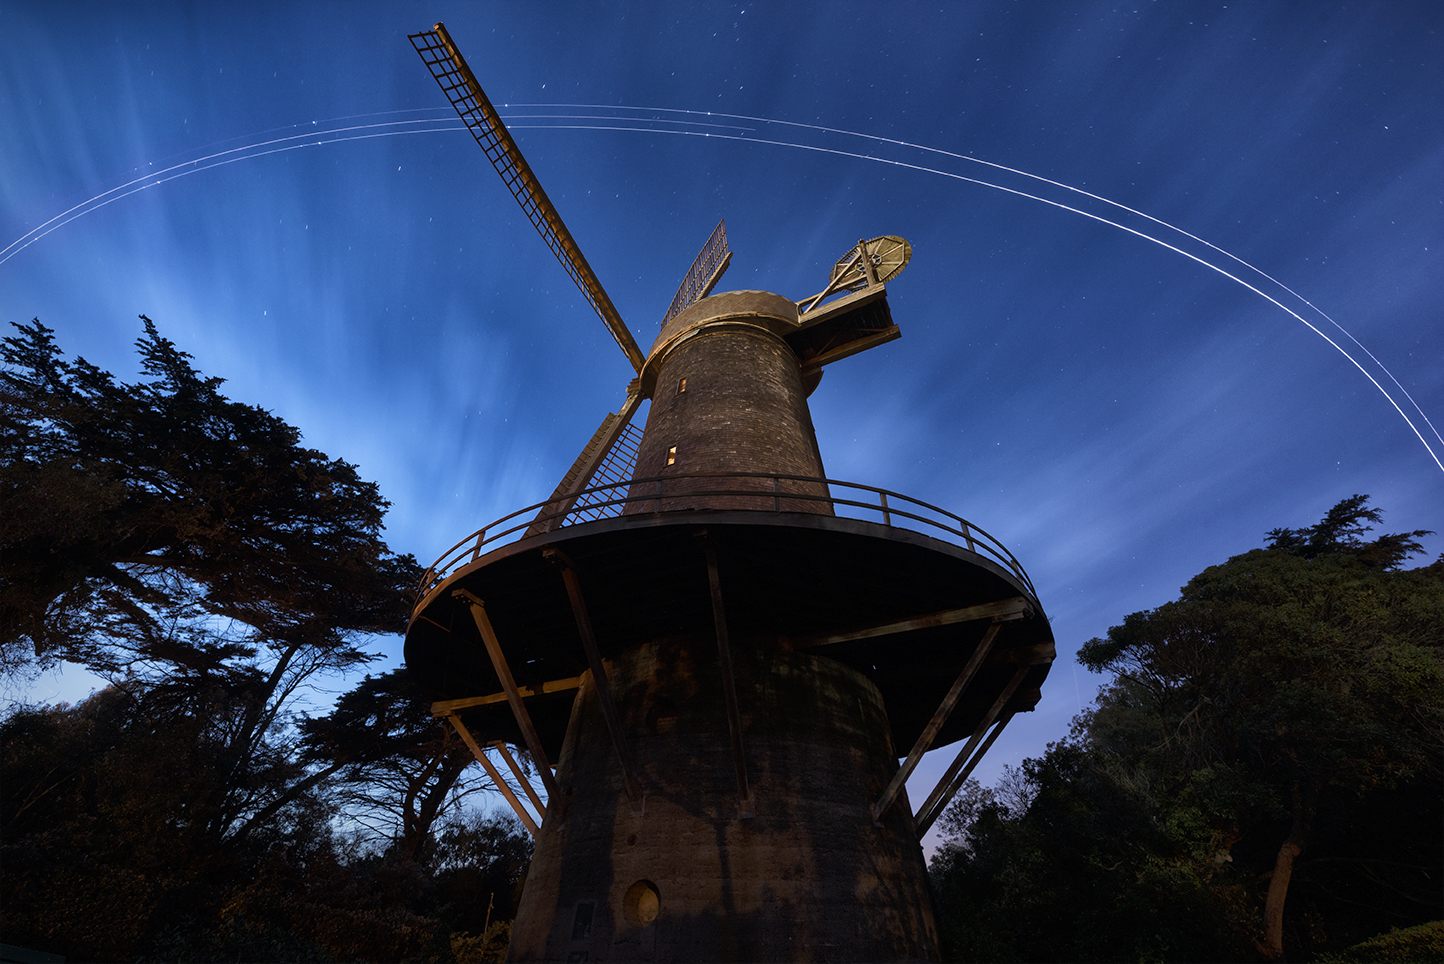 SF Dutch Windmill at evening blue hour as a plane cruises overhead